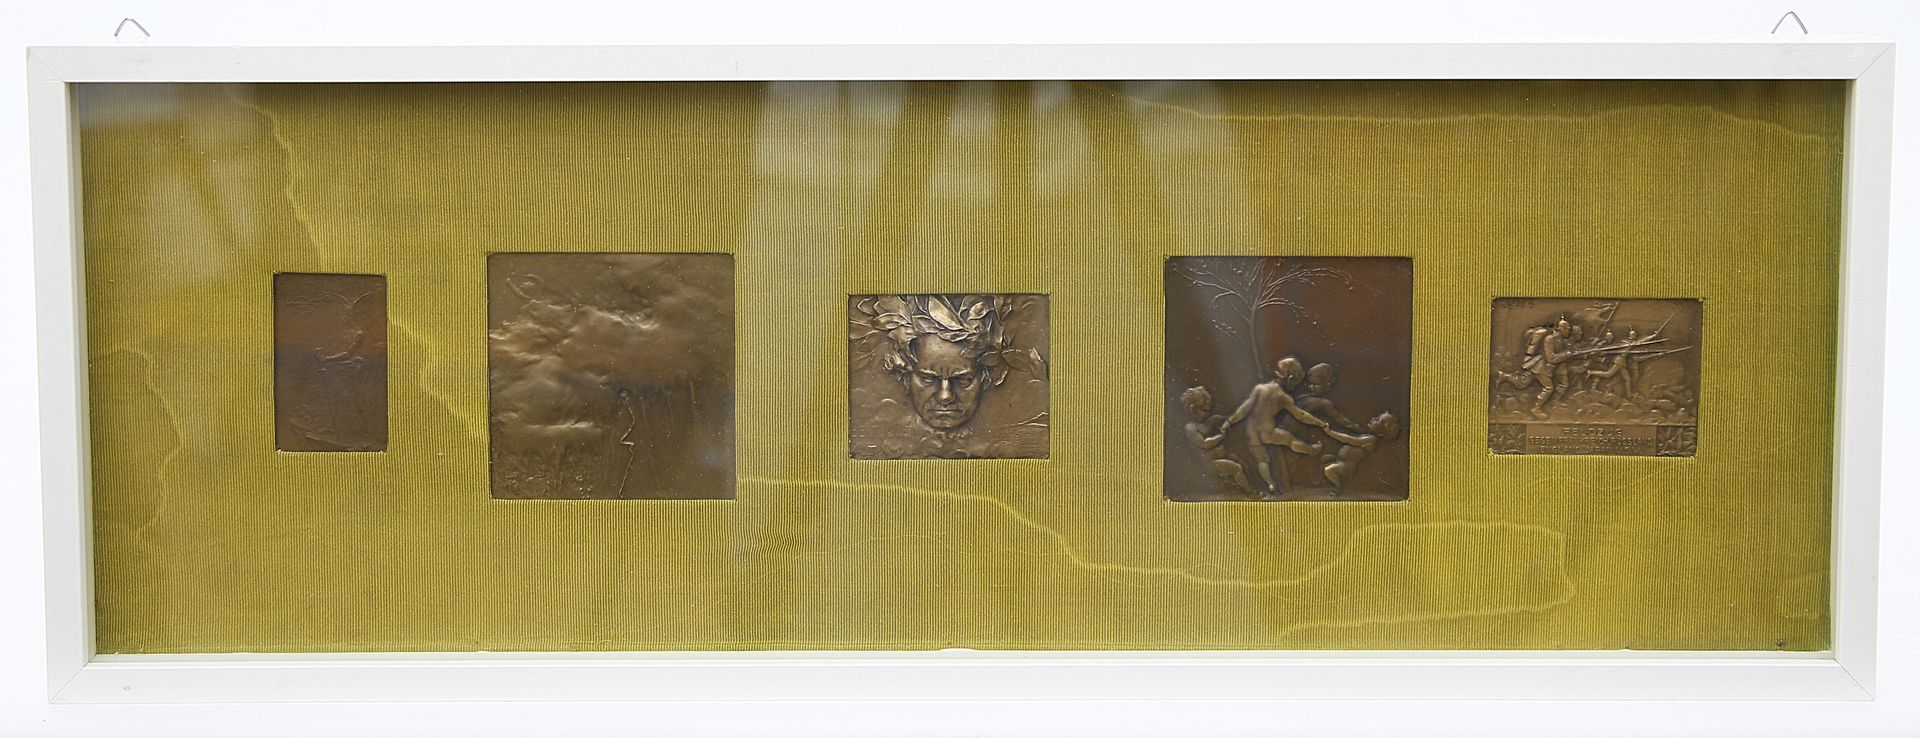 Fünf Wiener Jugendstil-Reliefplaketten bzw. -Medaillen.